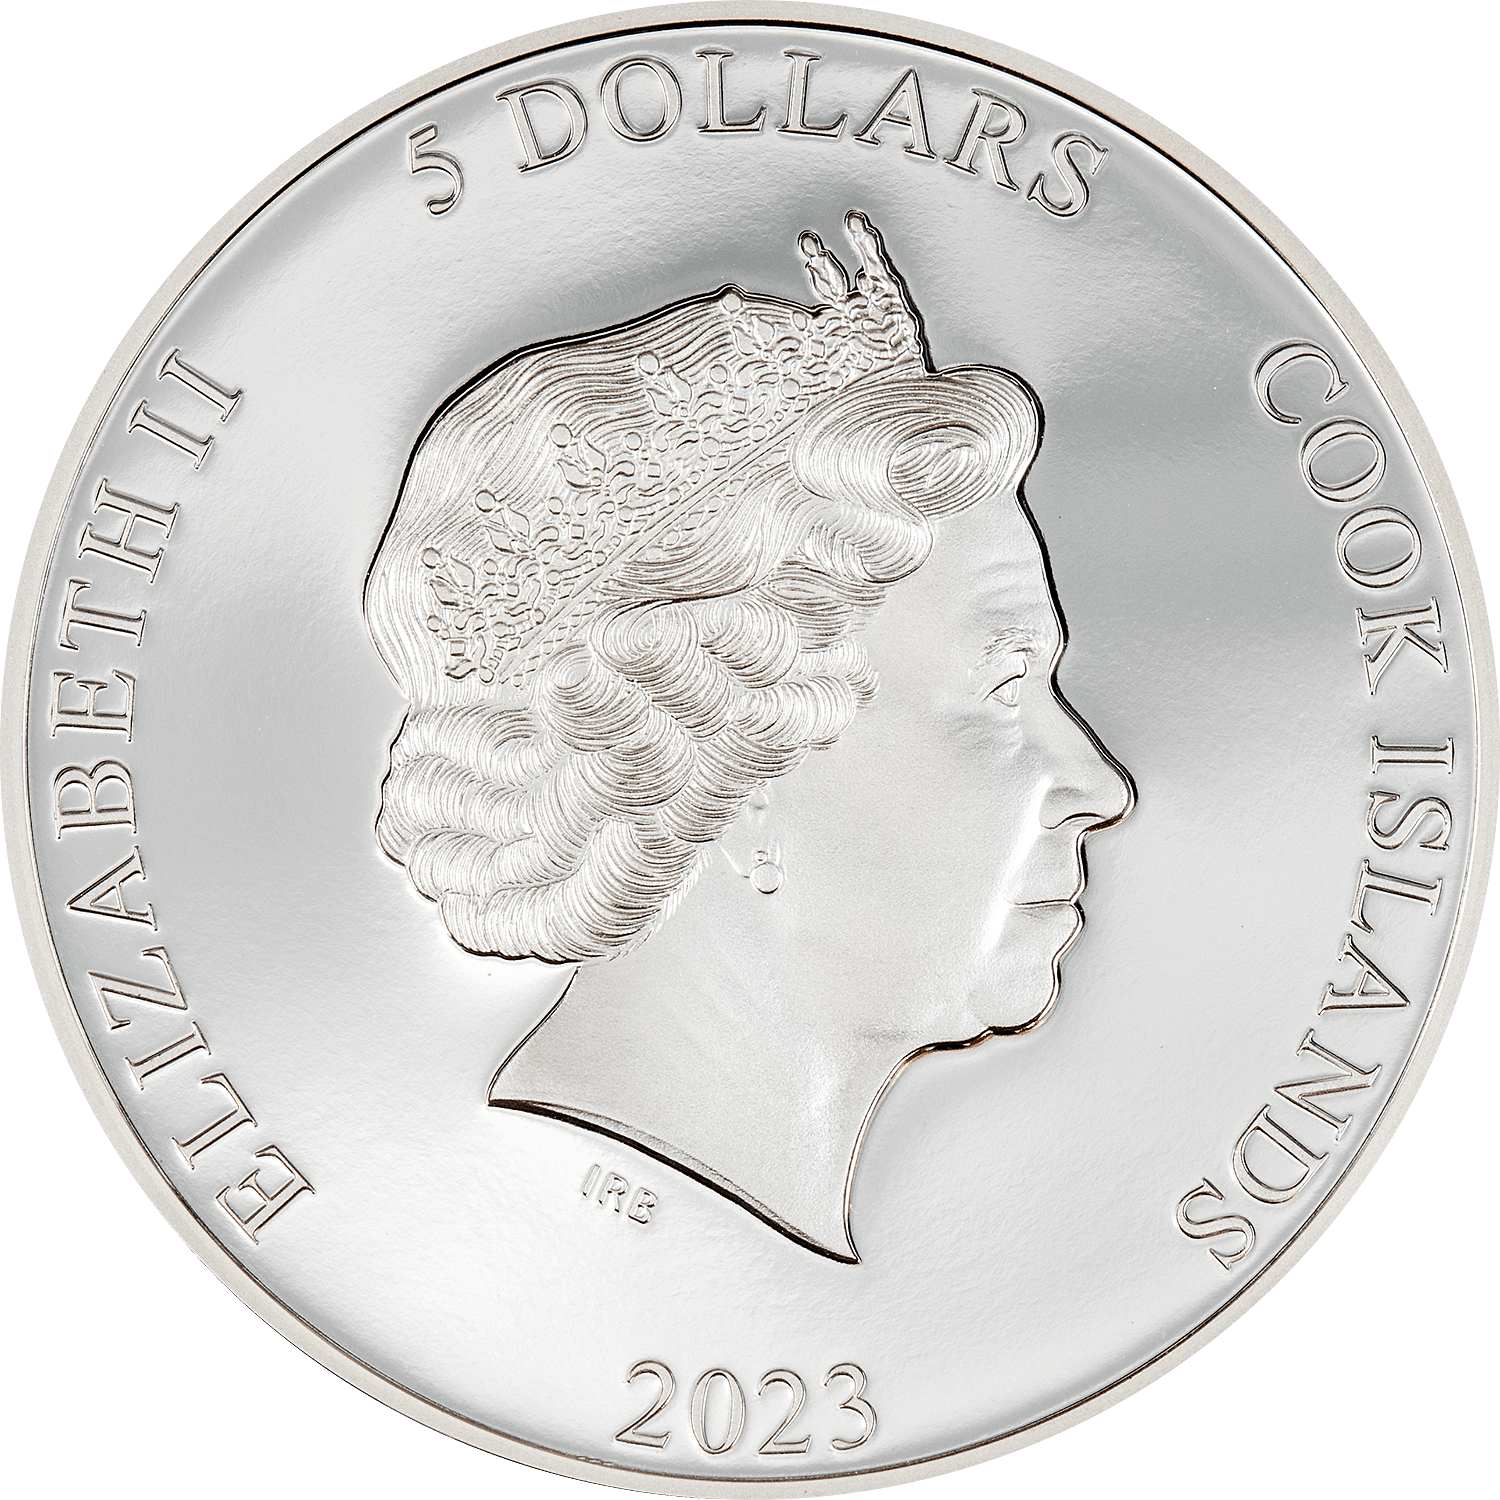 SECOND SKIN 1 Oz Silver Coin $5 Cook Islands 2023 - PARTHAVA COIN